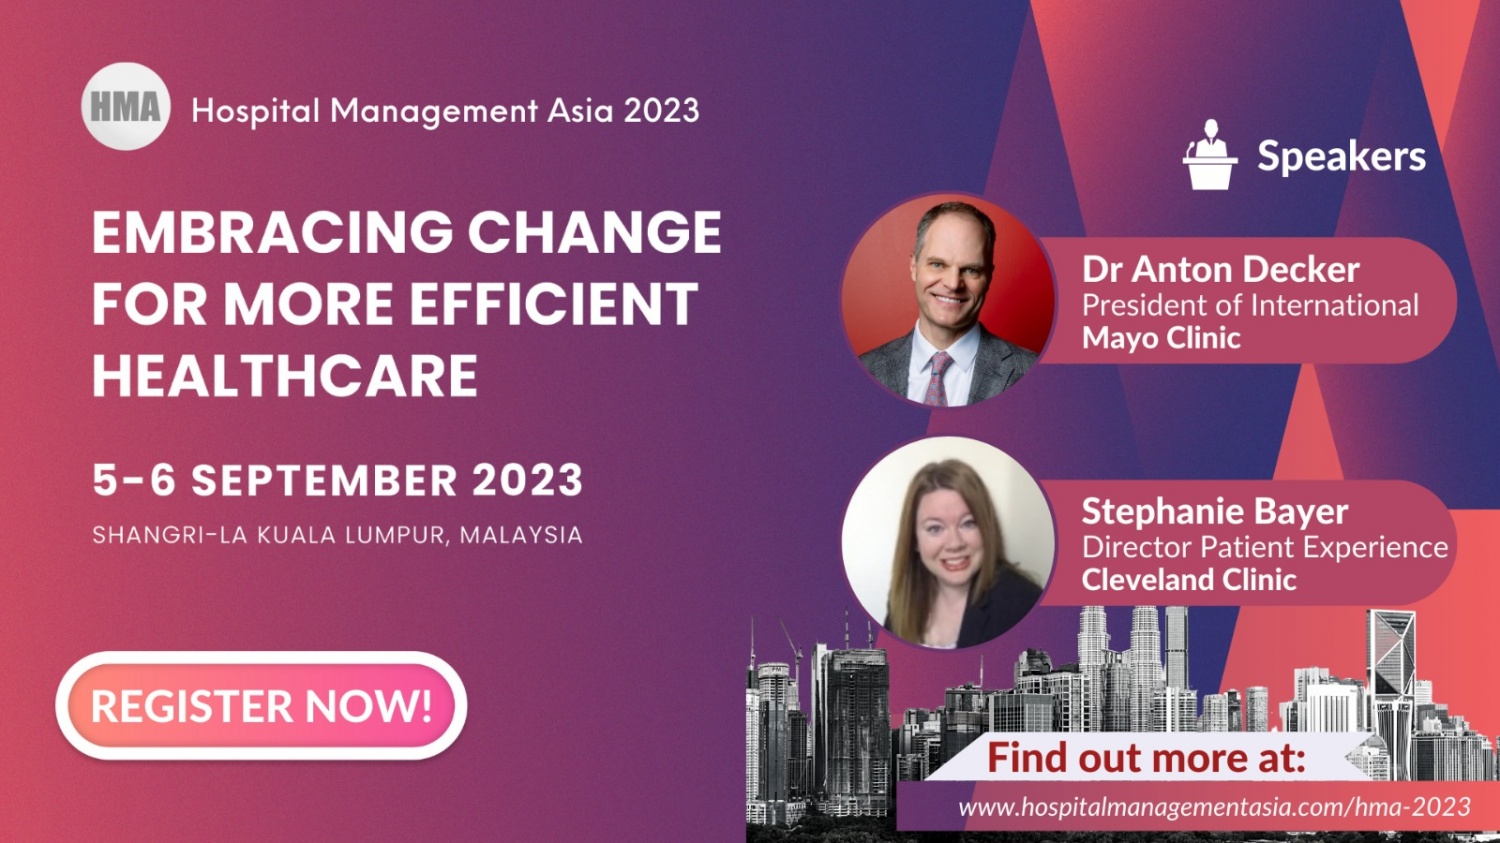 Hospital Management Asia 2023 Conference 